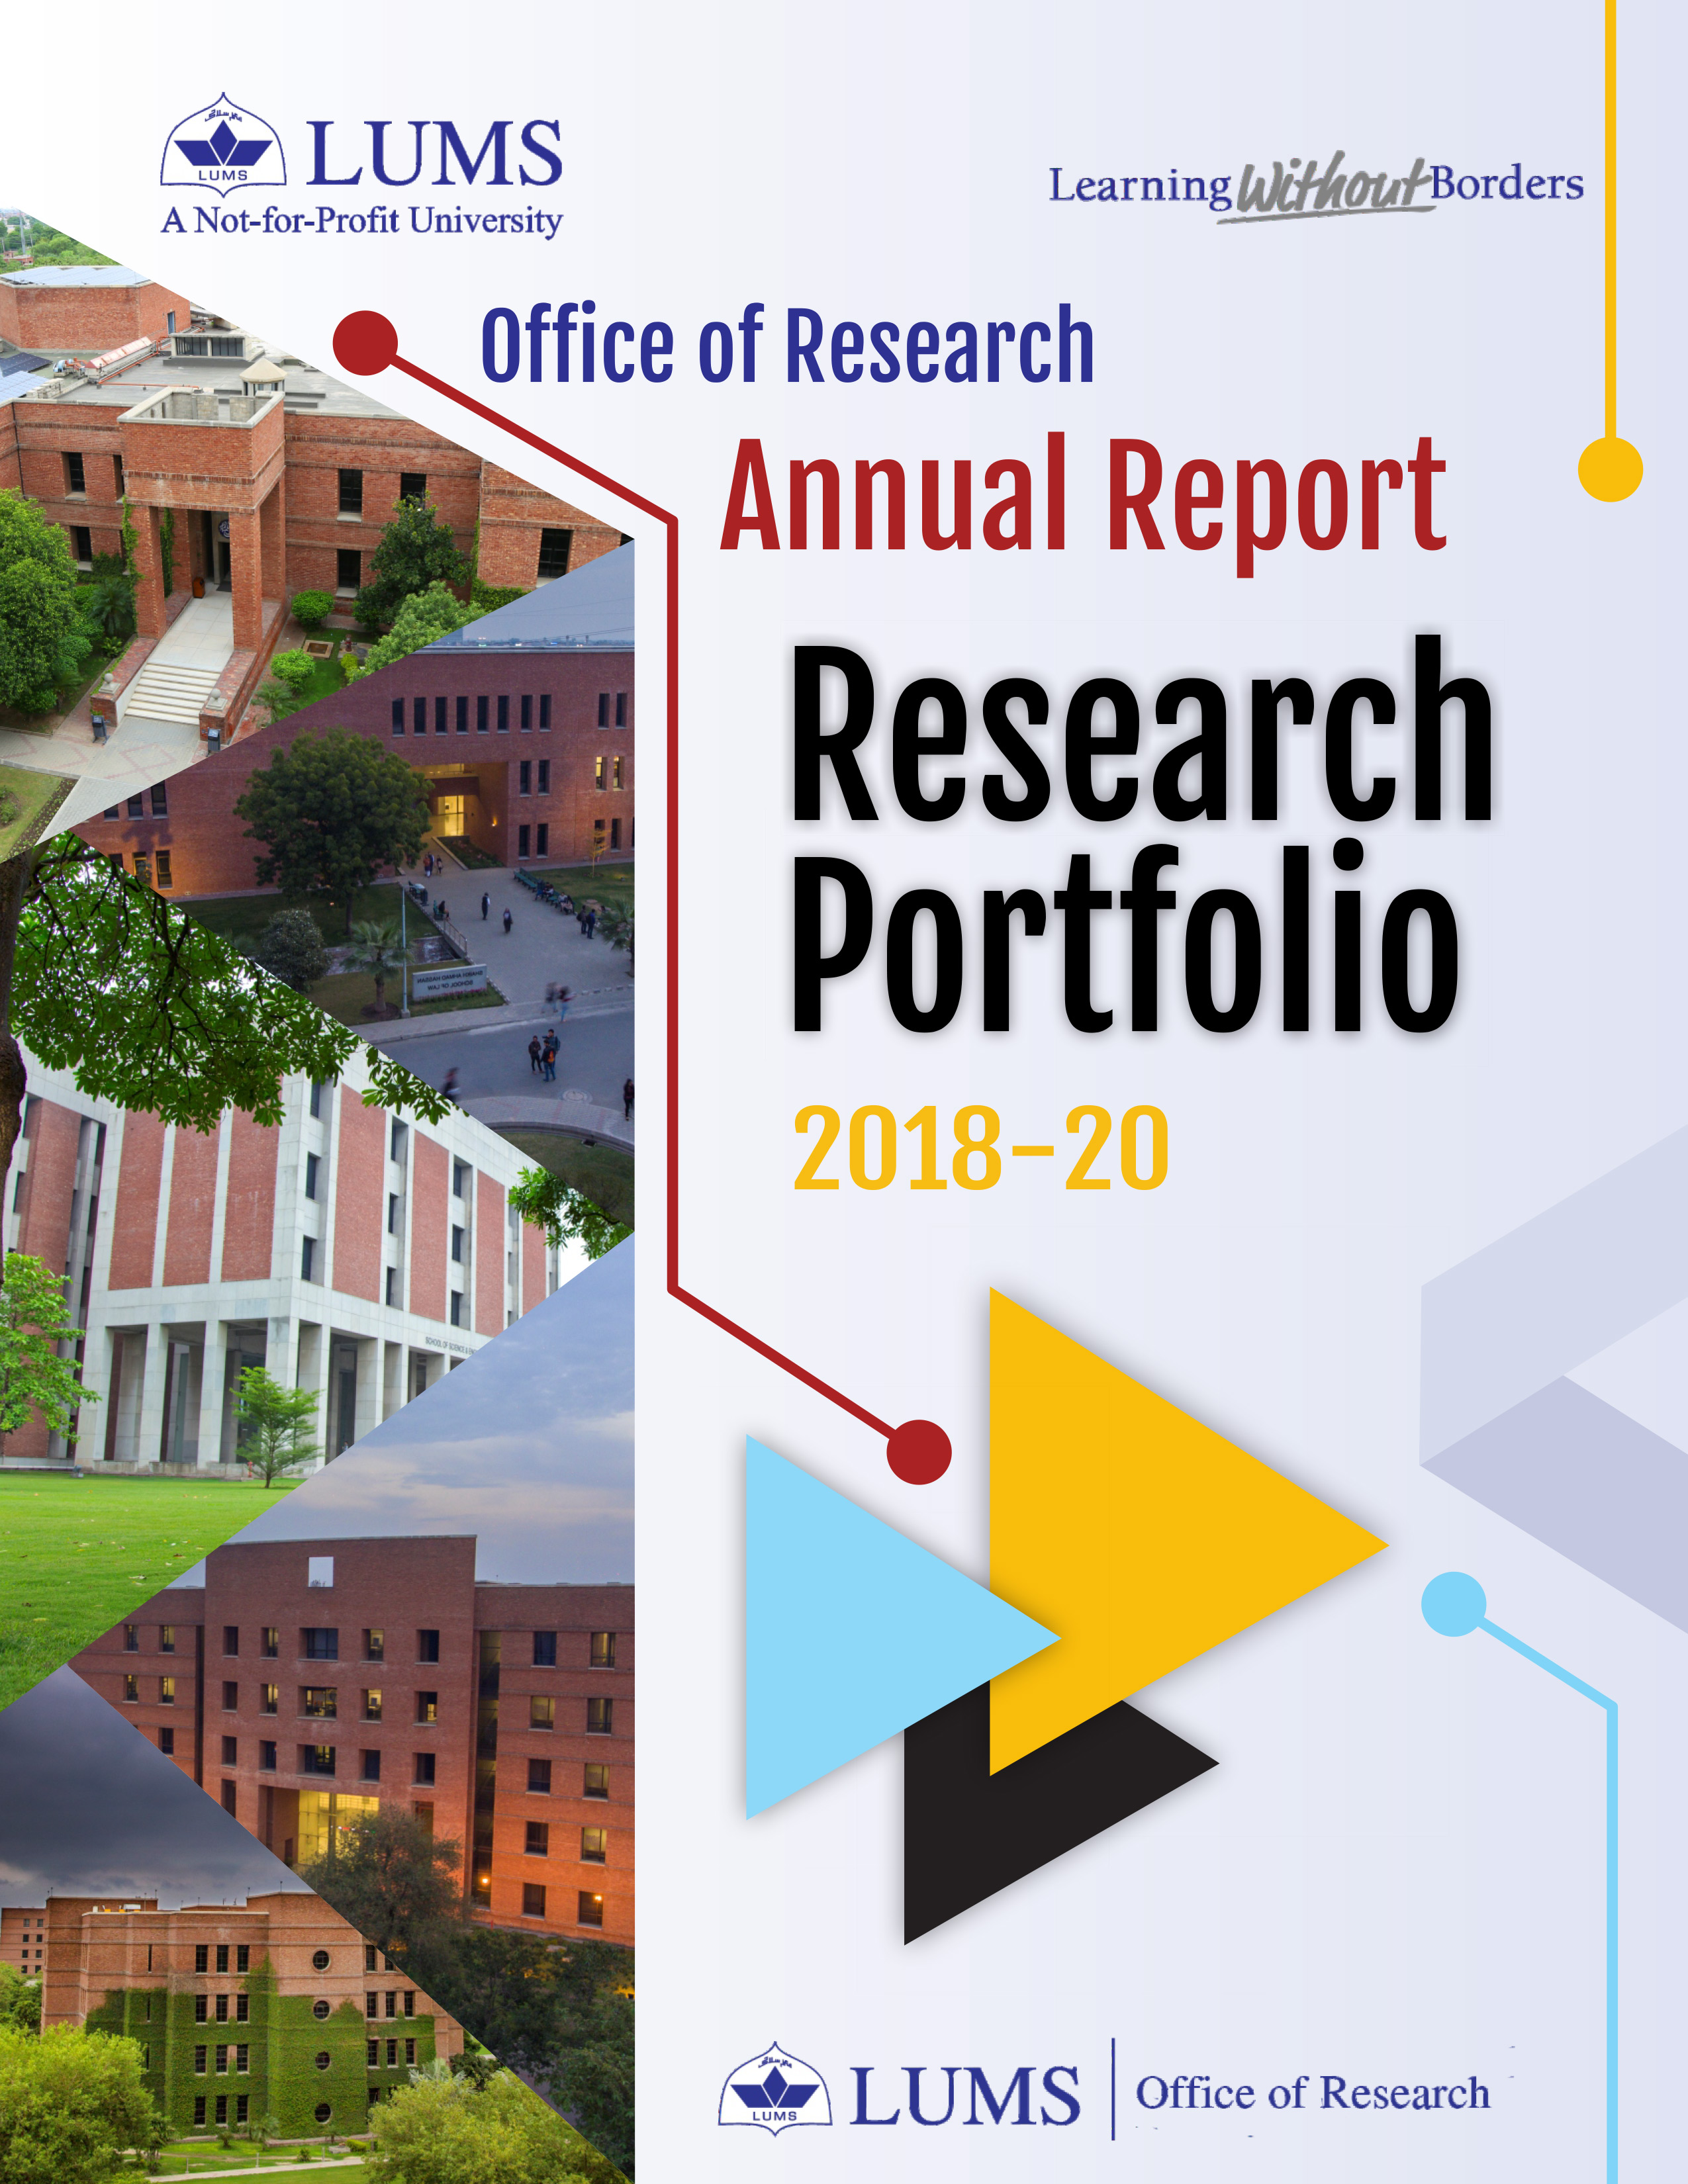 Research Portfolio 2018-2020